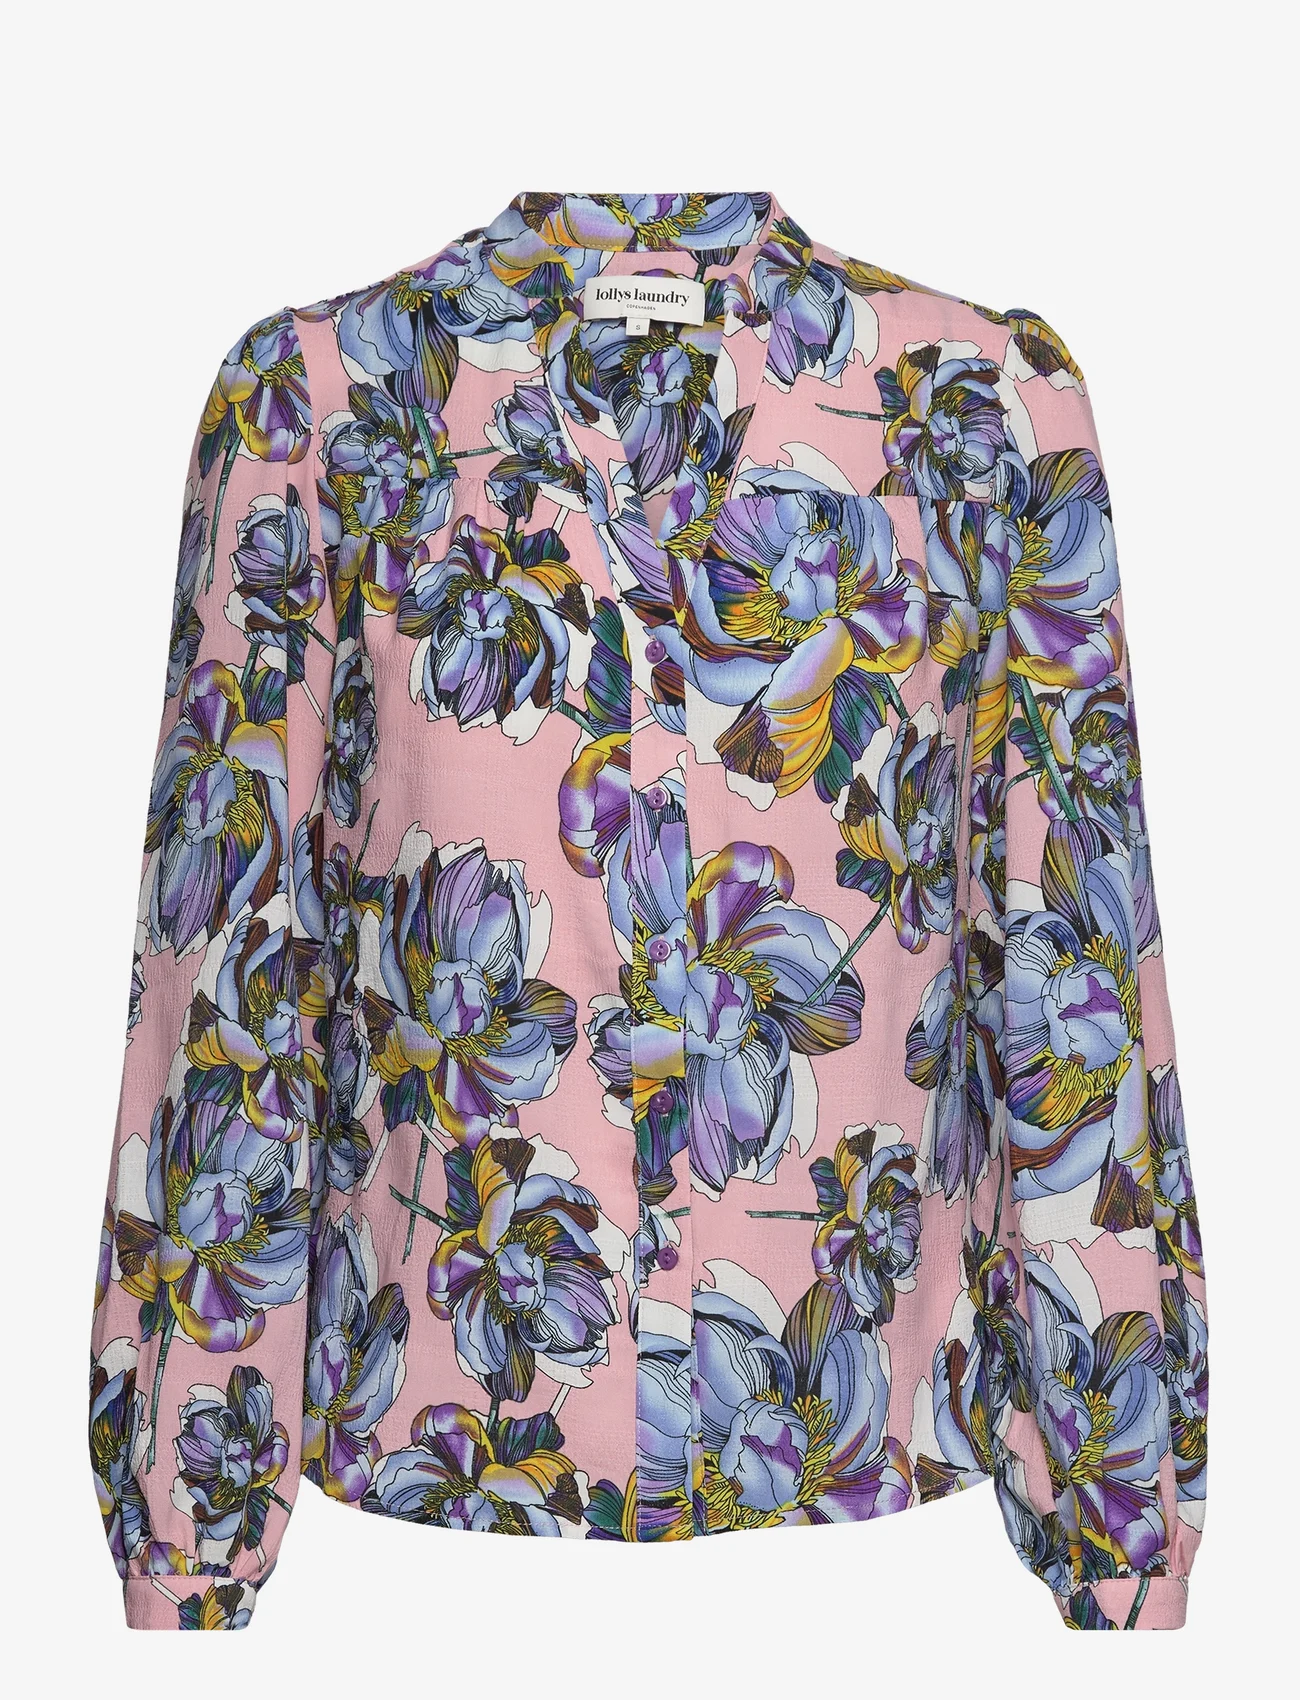 Lollys Laundry - Elif Shirt - langärmlige hemden - 74 flower print - 0